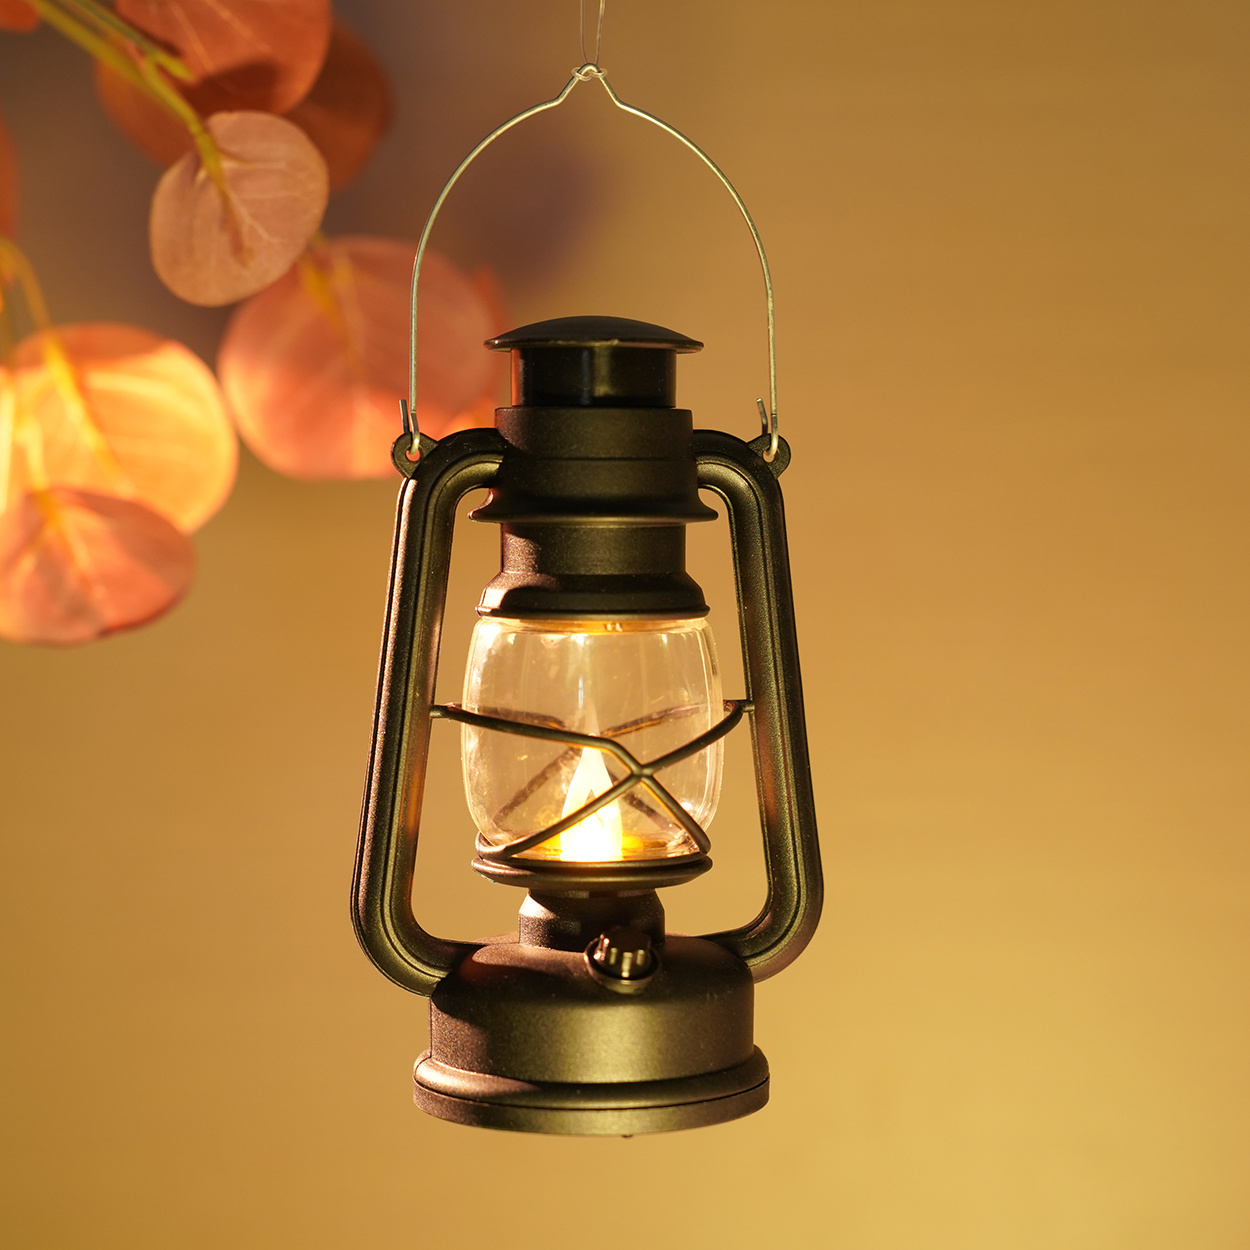 Old-Fashioned Light Up Lantern  Old lanterns, Lanterns decor, Lantern  lights